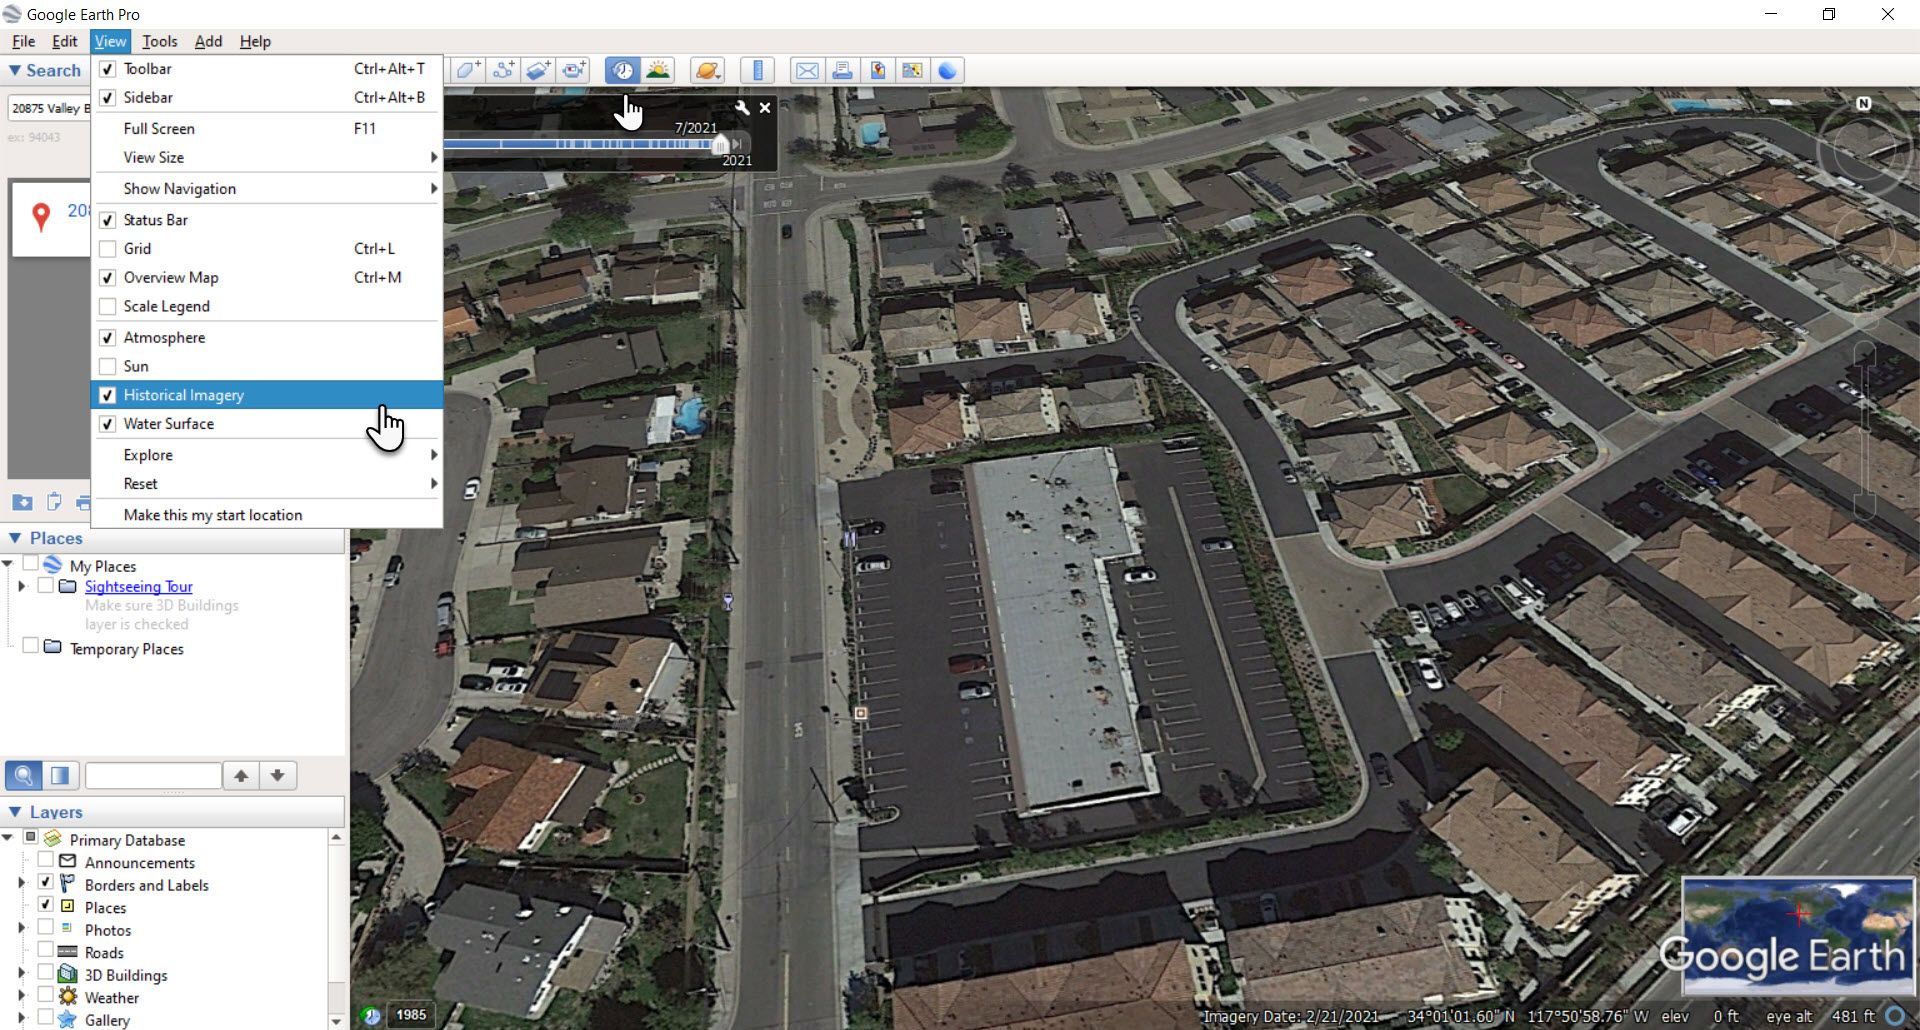 google earth aerial view 3d buildings